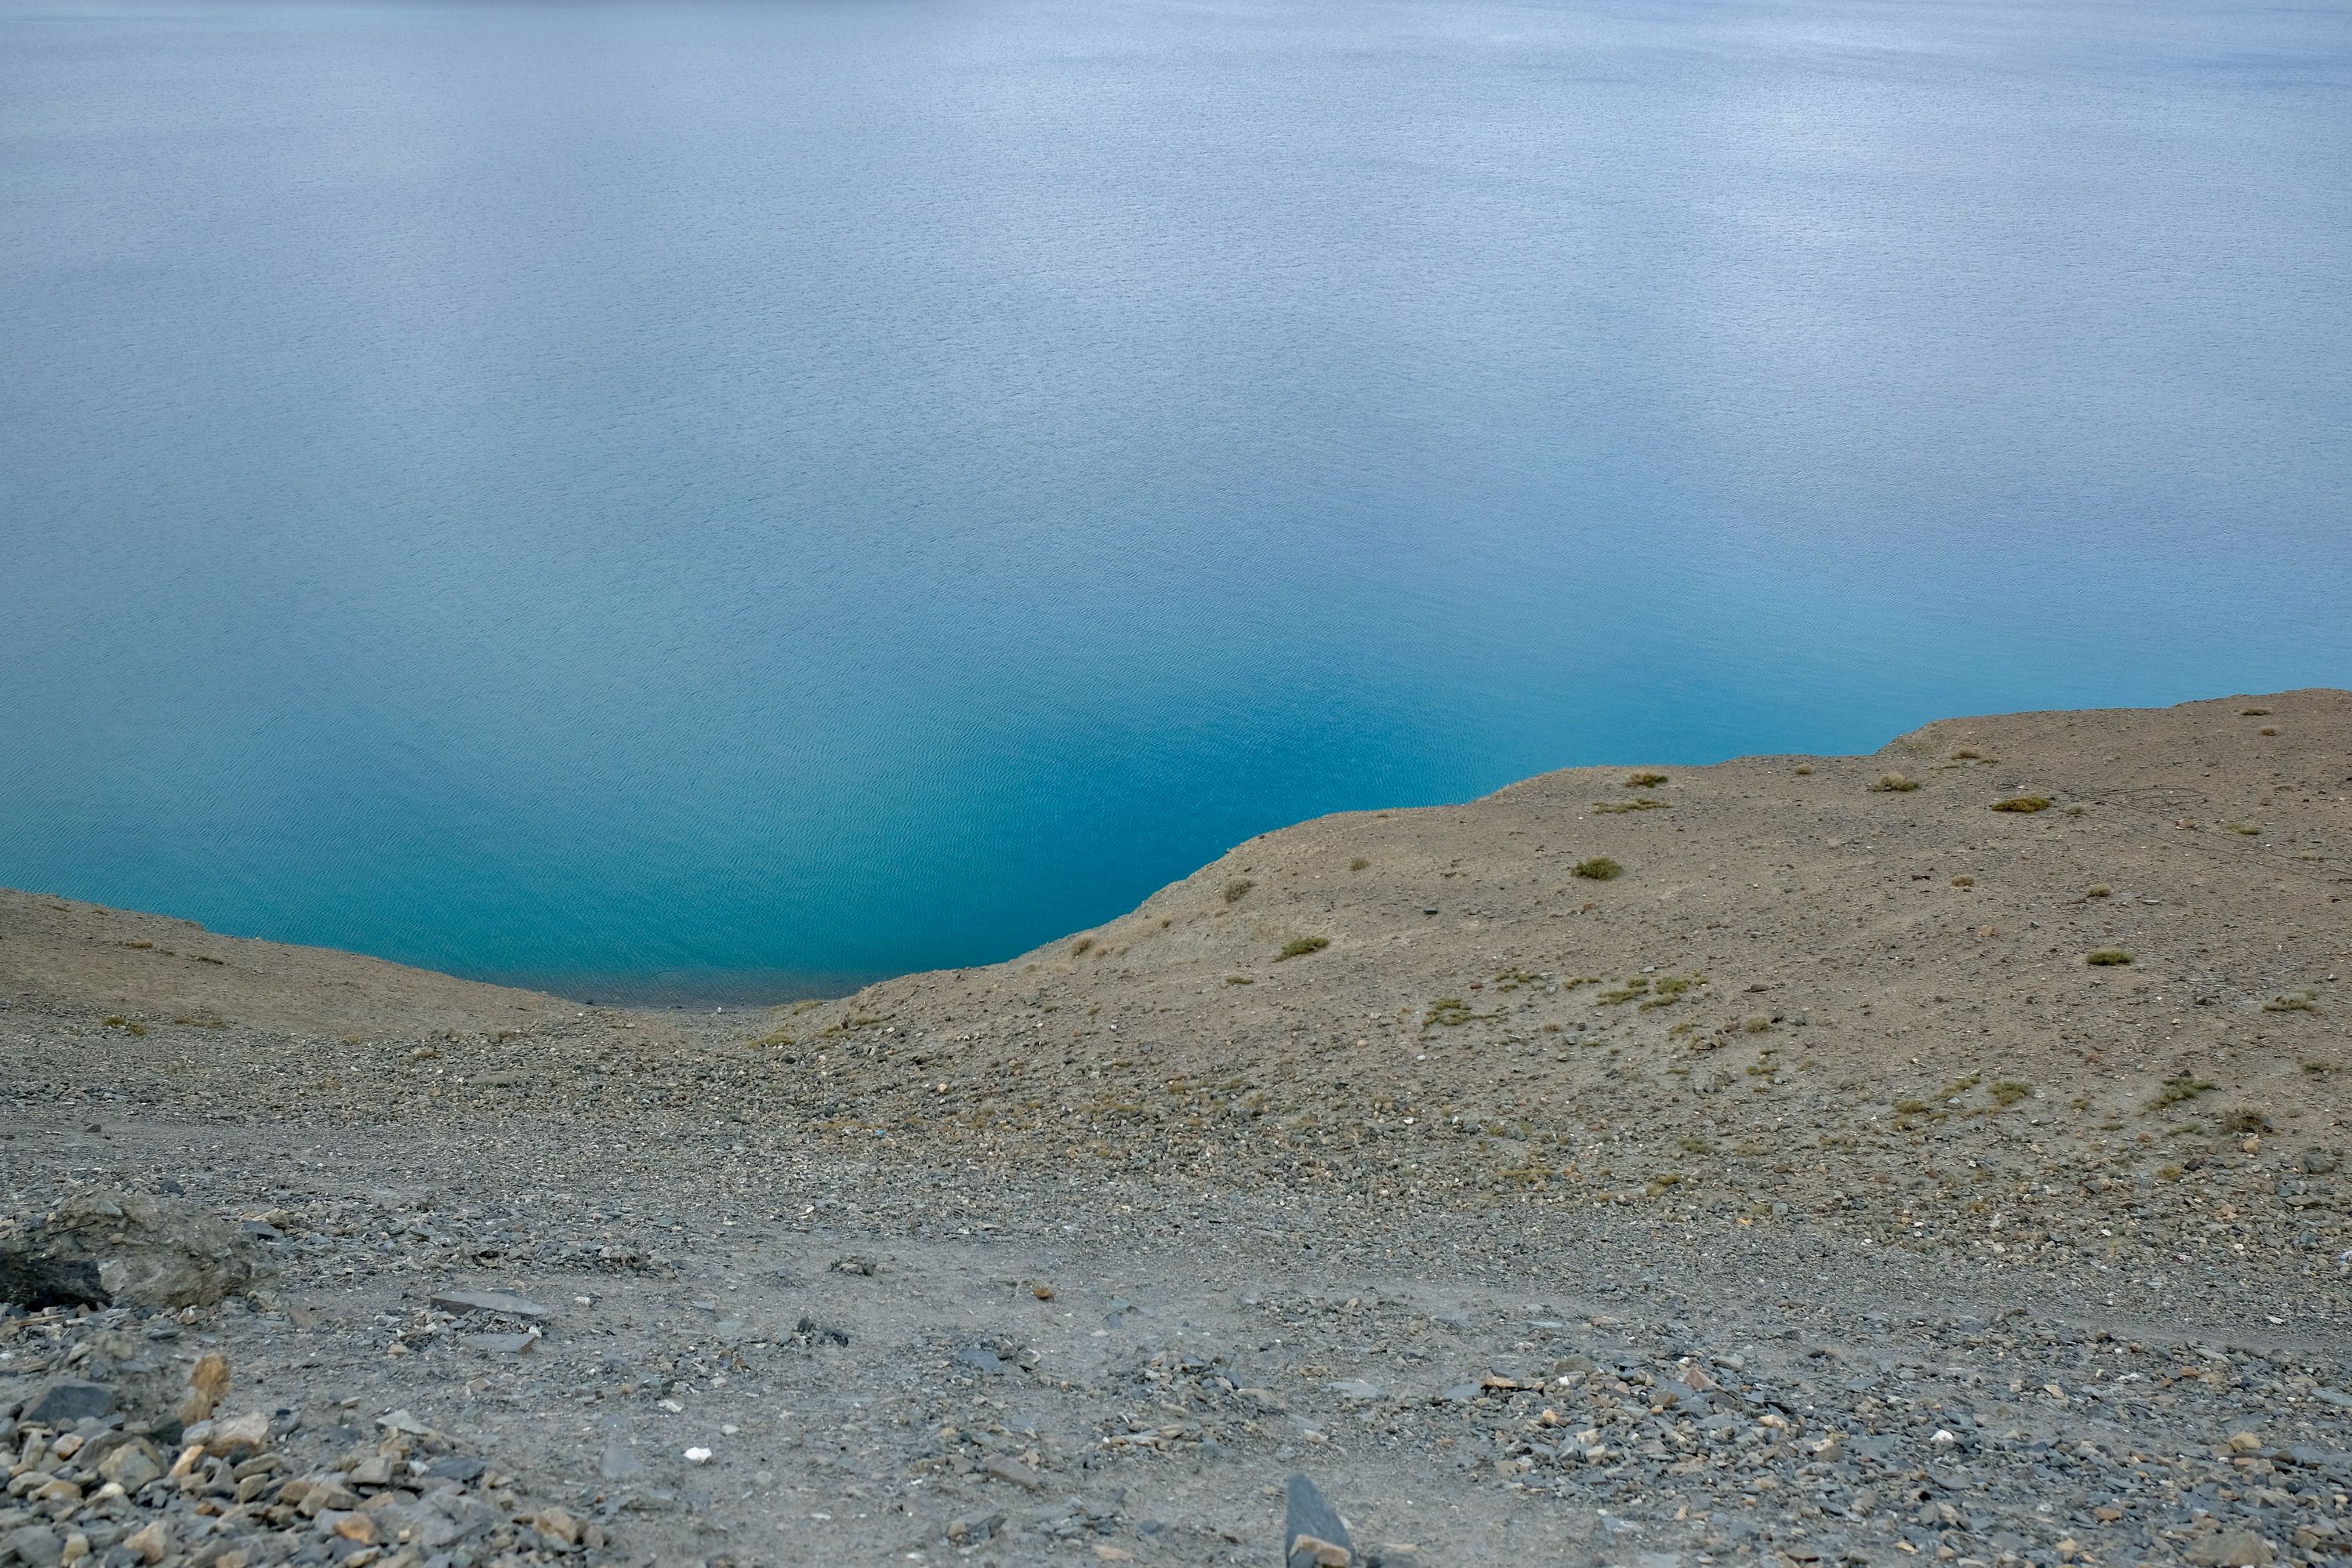 Pangong blues. Pangong lake, Ladakh, India. September 2021.